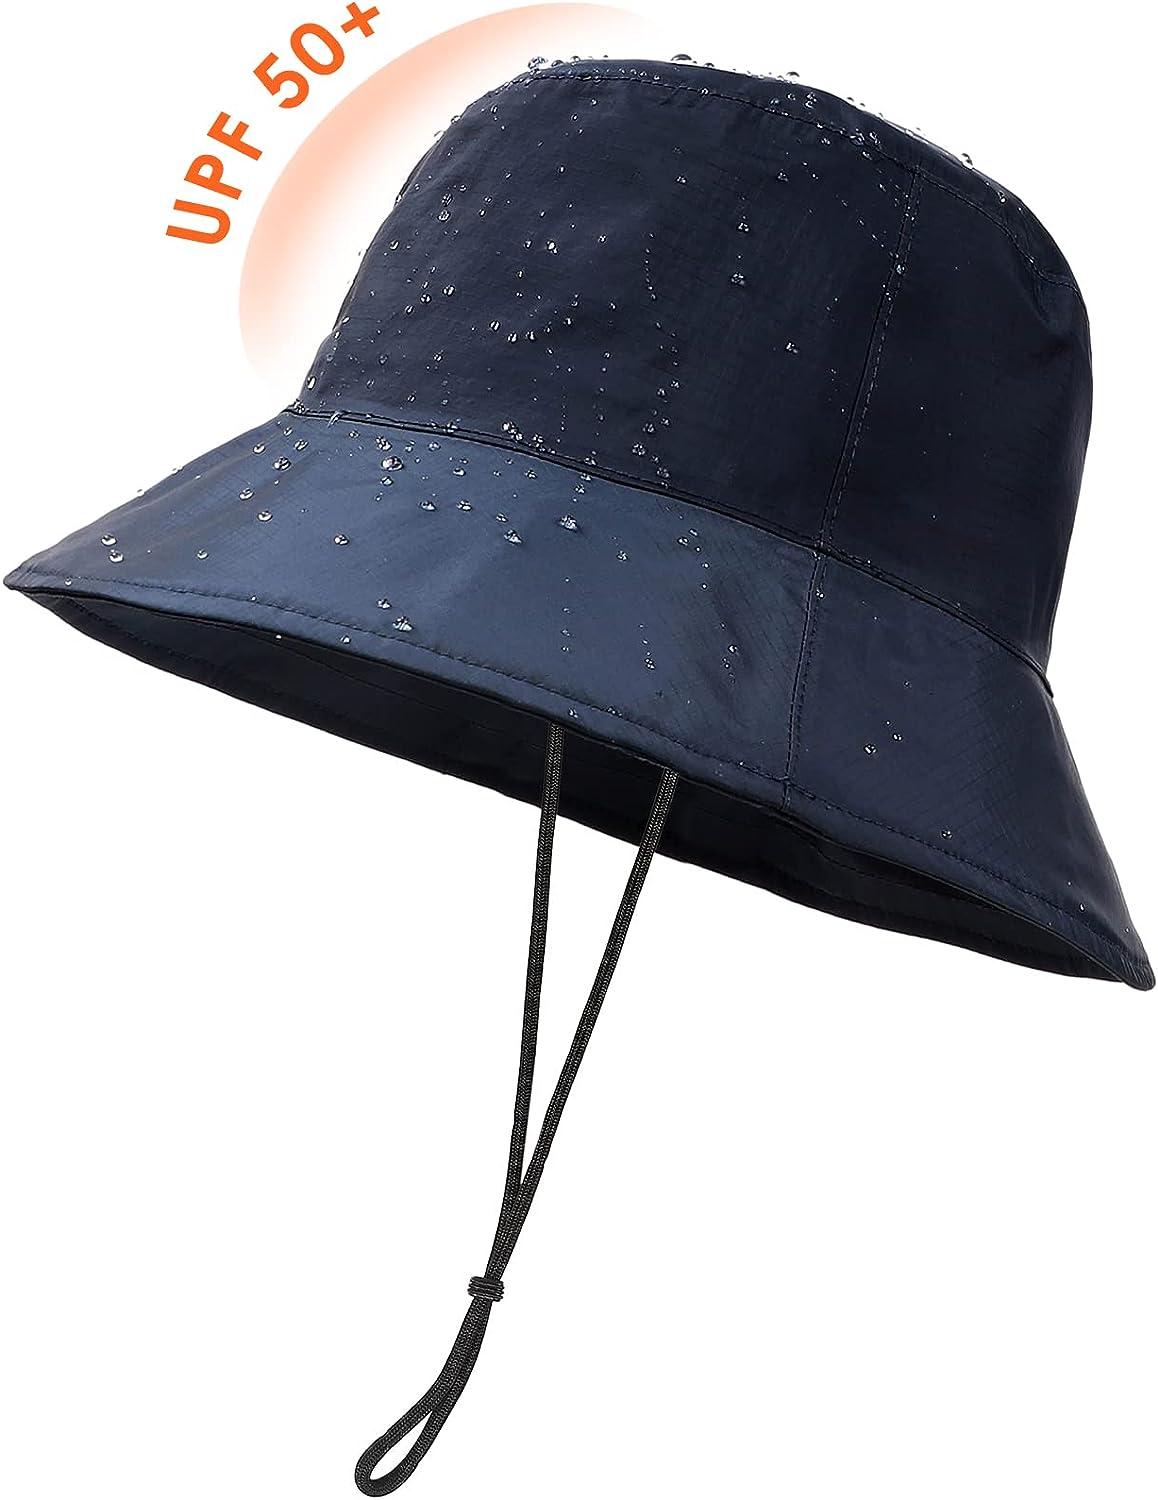  Waterproof Bucket Rain Hat For Men Women Wide Brim Sun  Protection Packable Boonie Hat Outdoor Beach Safari Fishing Hat Navy Blue